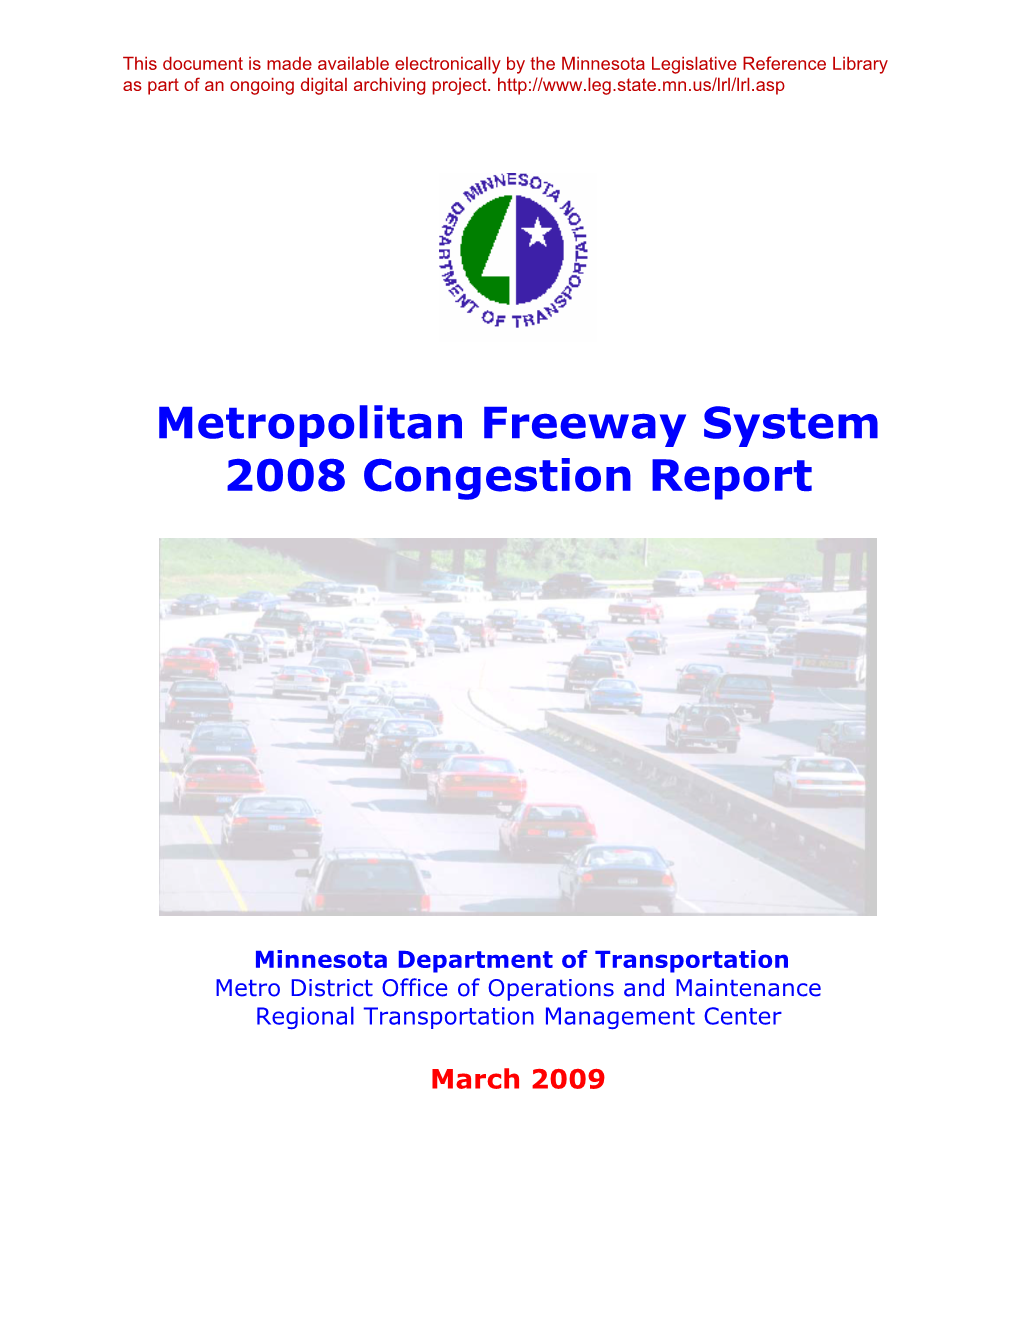 Metropolitan Freeway System 2008 Congestion Report